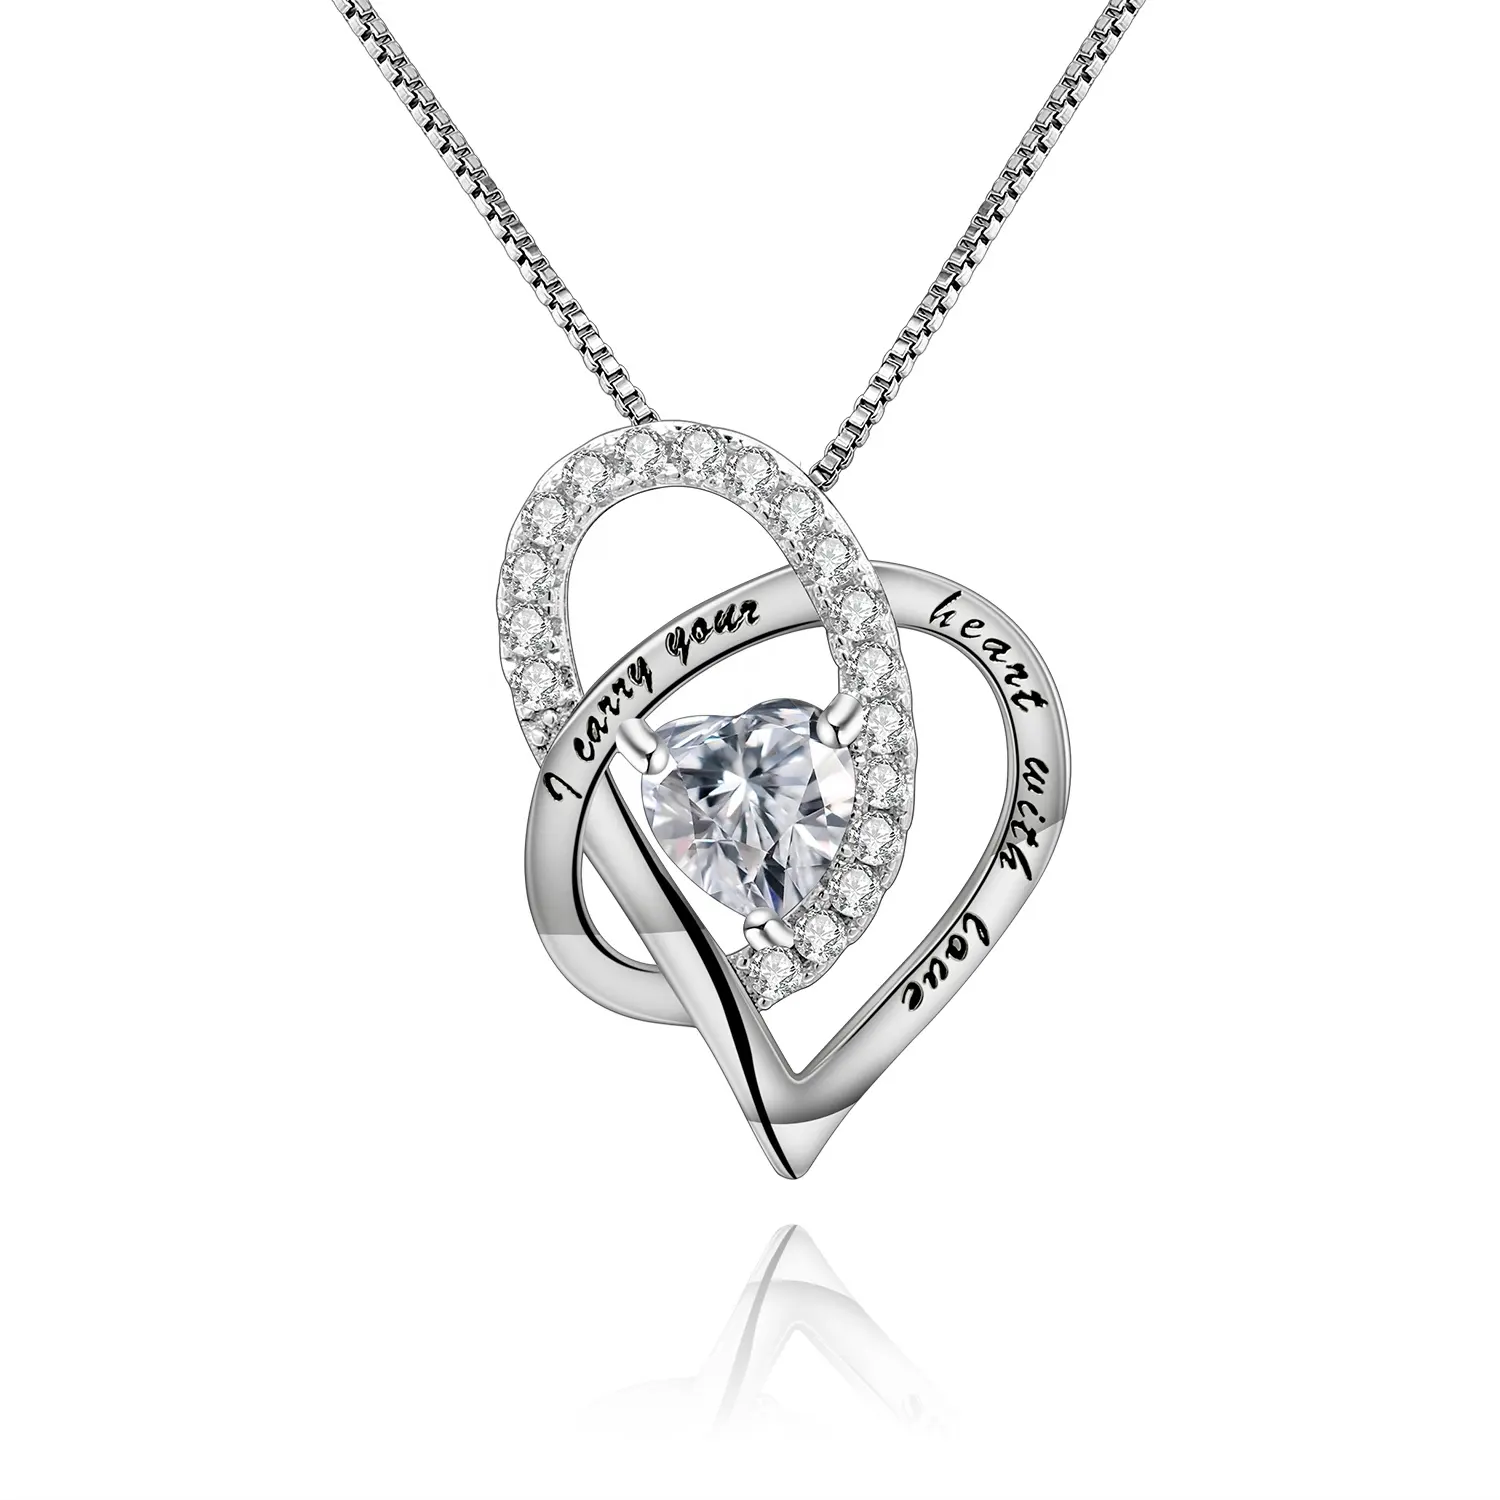 C8961 Minimalist Necklace Pendant 925 Sterling Silver Feminine Twining Heart CZ Diamond Necklace Gift Engrave Name Necklace